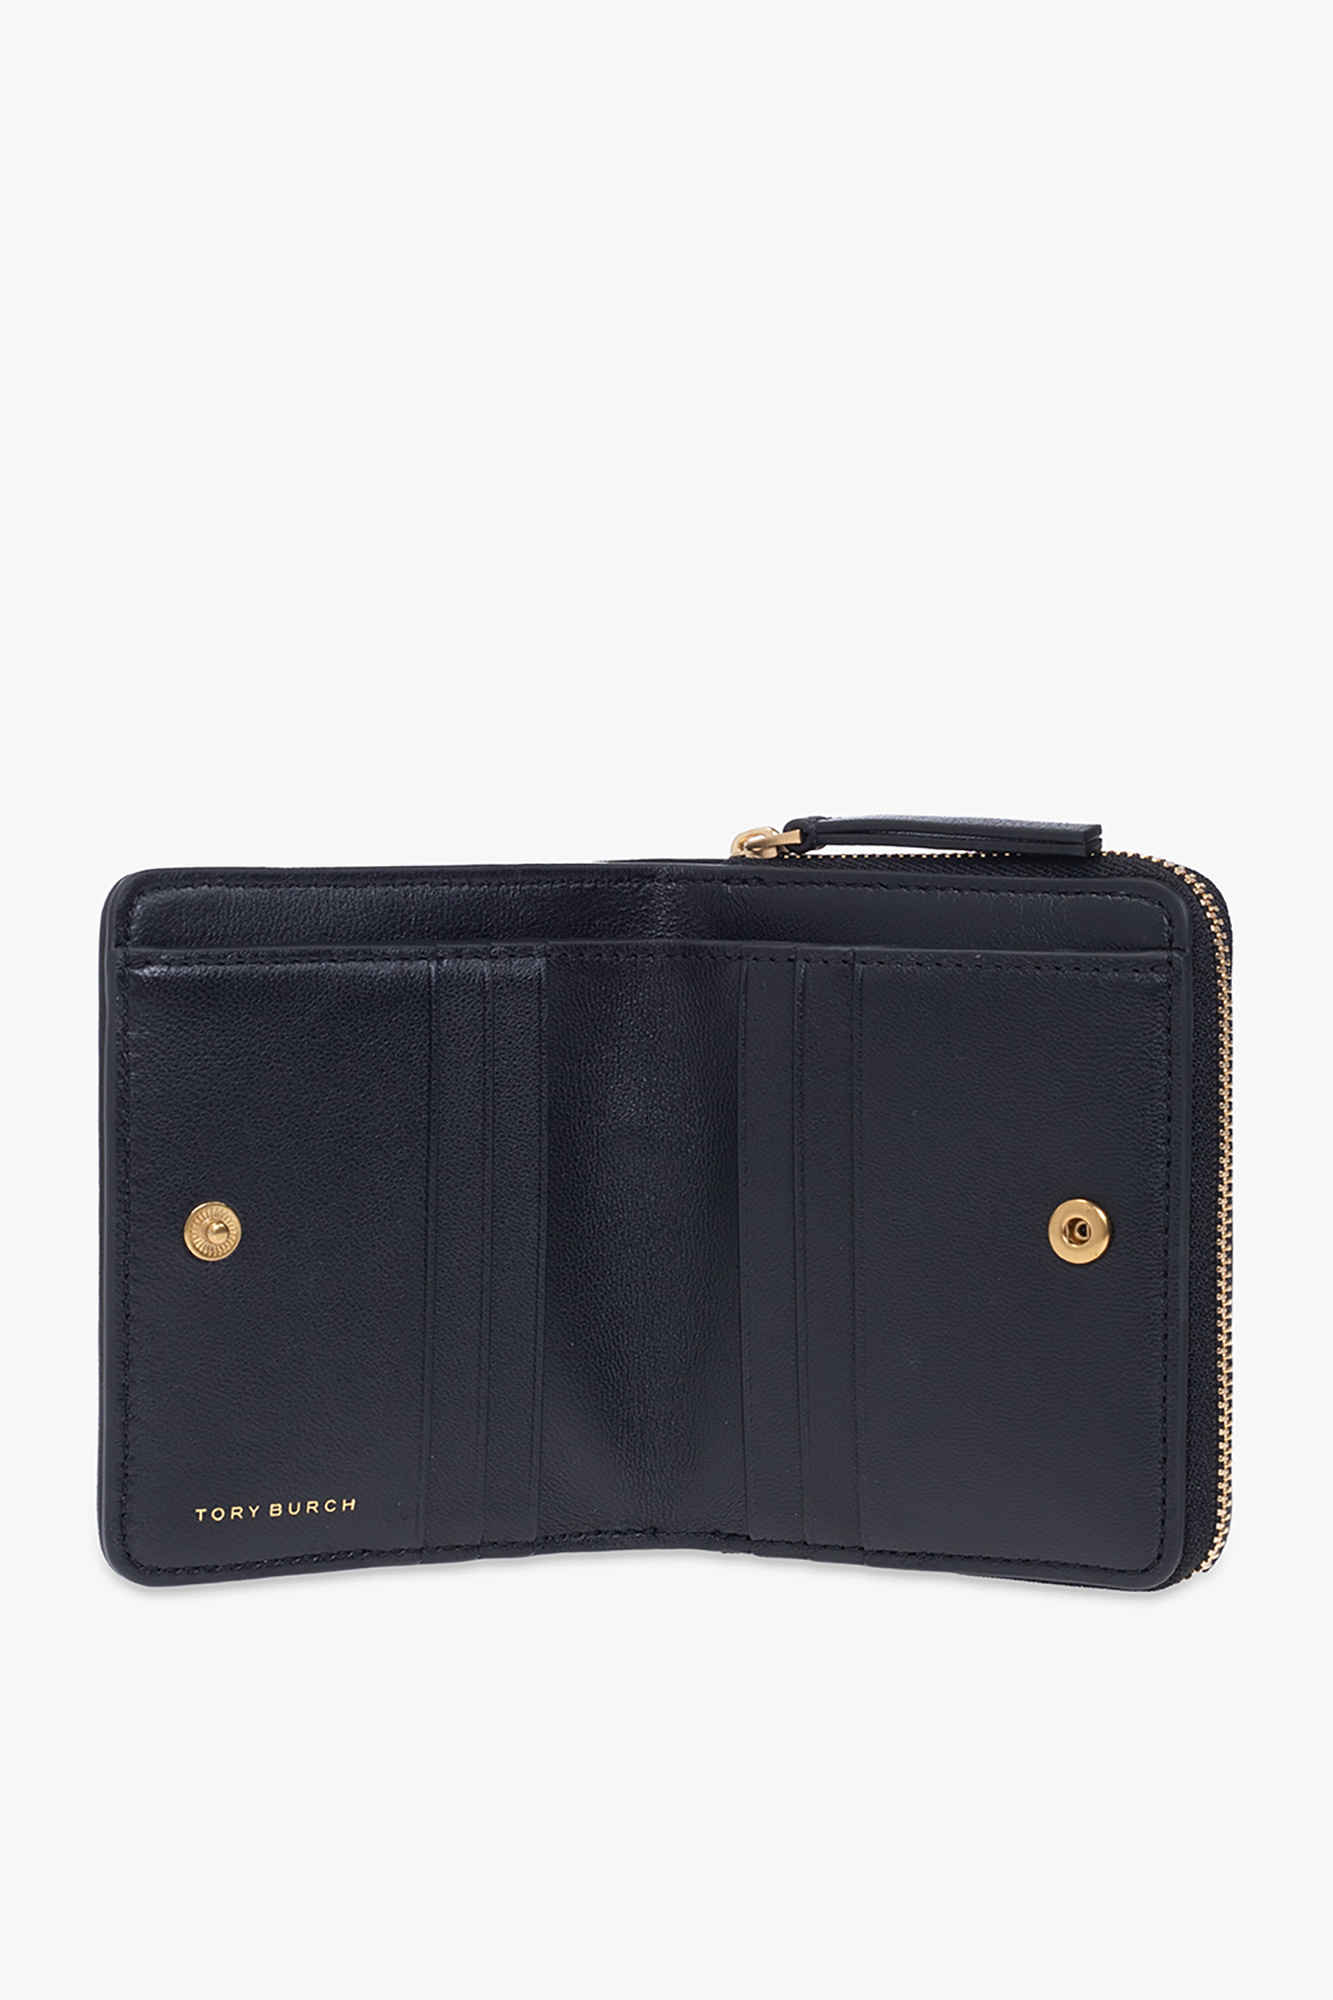 Tory Burch ‘Kira’ leather wallet